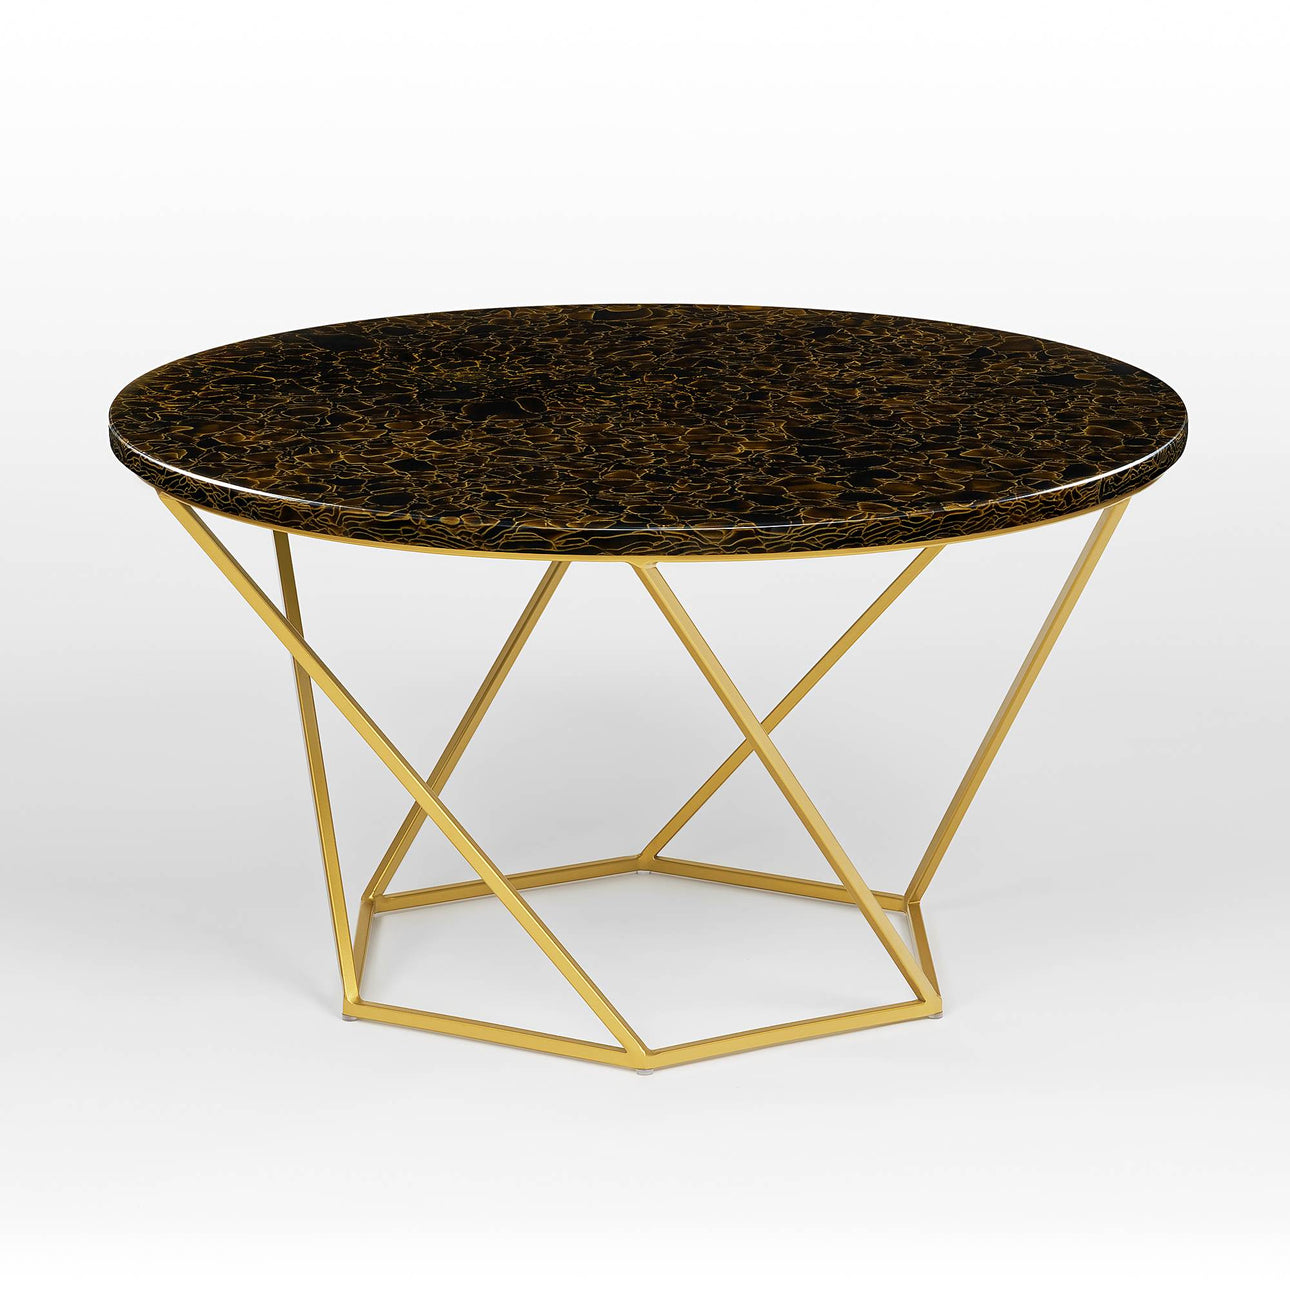 Venice glass ceramic coffee table